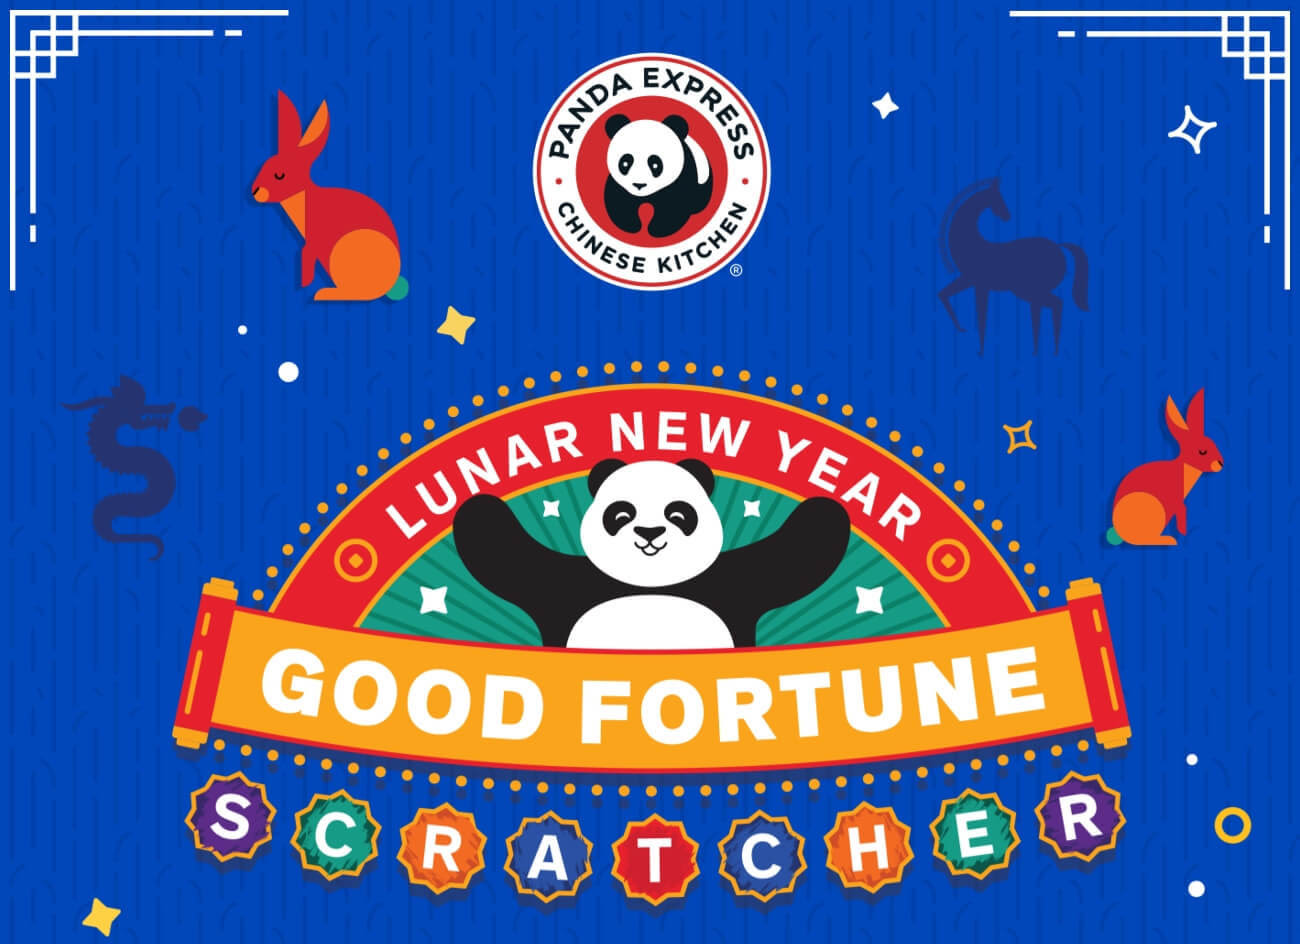 Panda Express Good Fortune Scratcher Instant Win Game